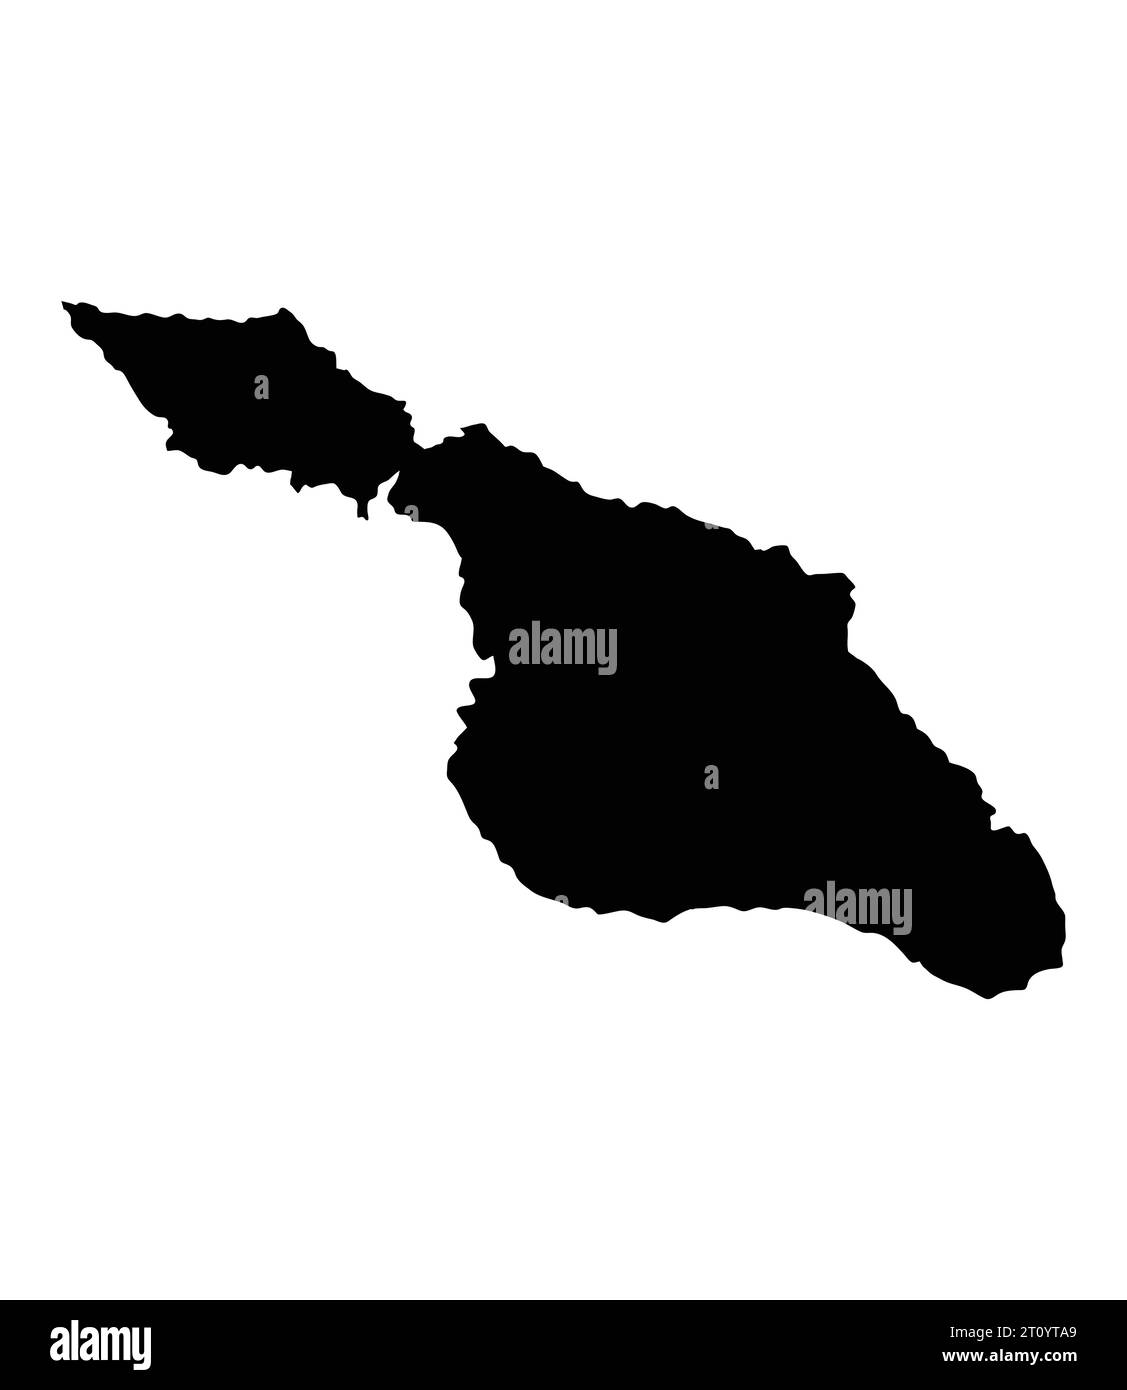 Santa catalina Insel Karte Silhouette Region Gebiet, schwarze Form Stil Illustration Stock Vektor